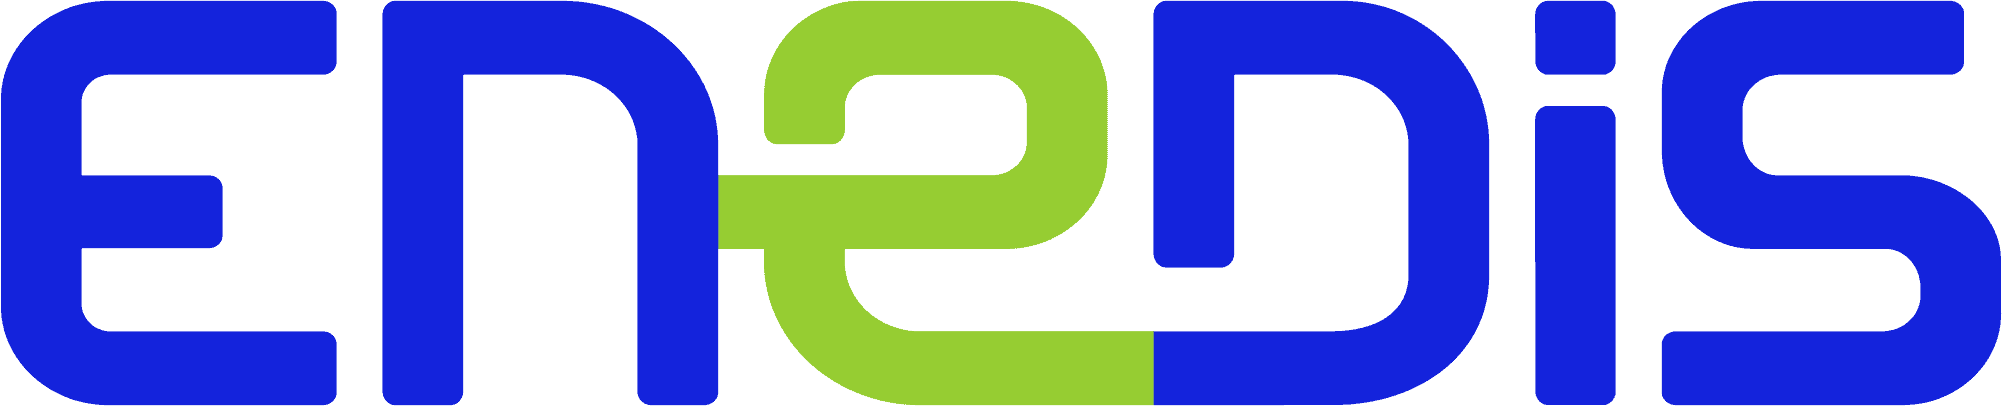 logo d'enedis